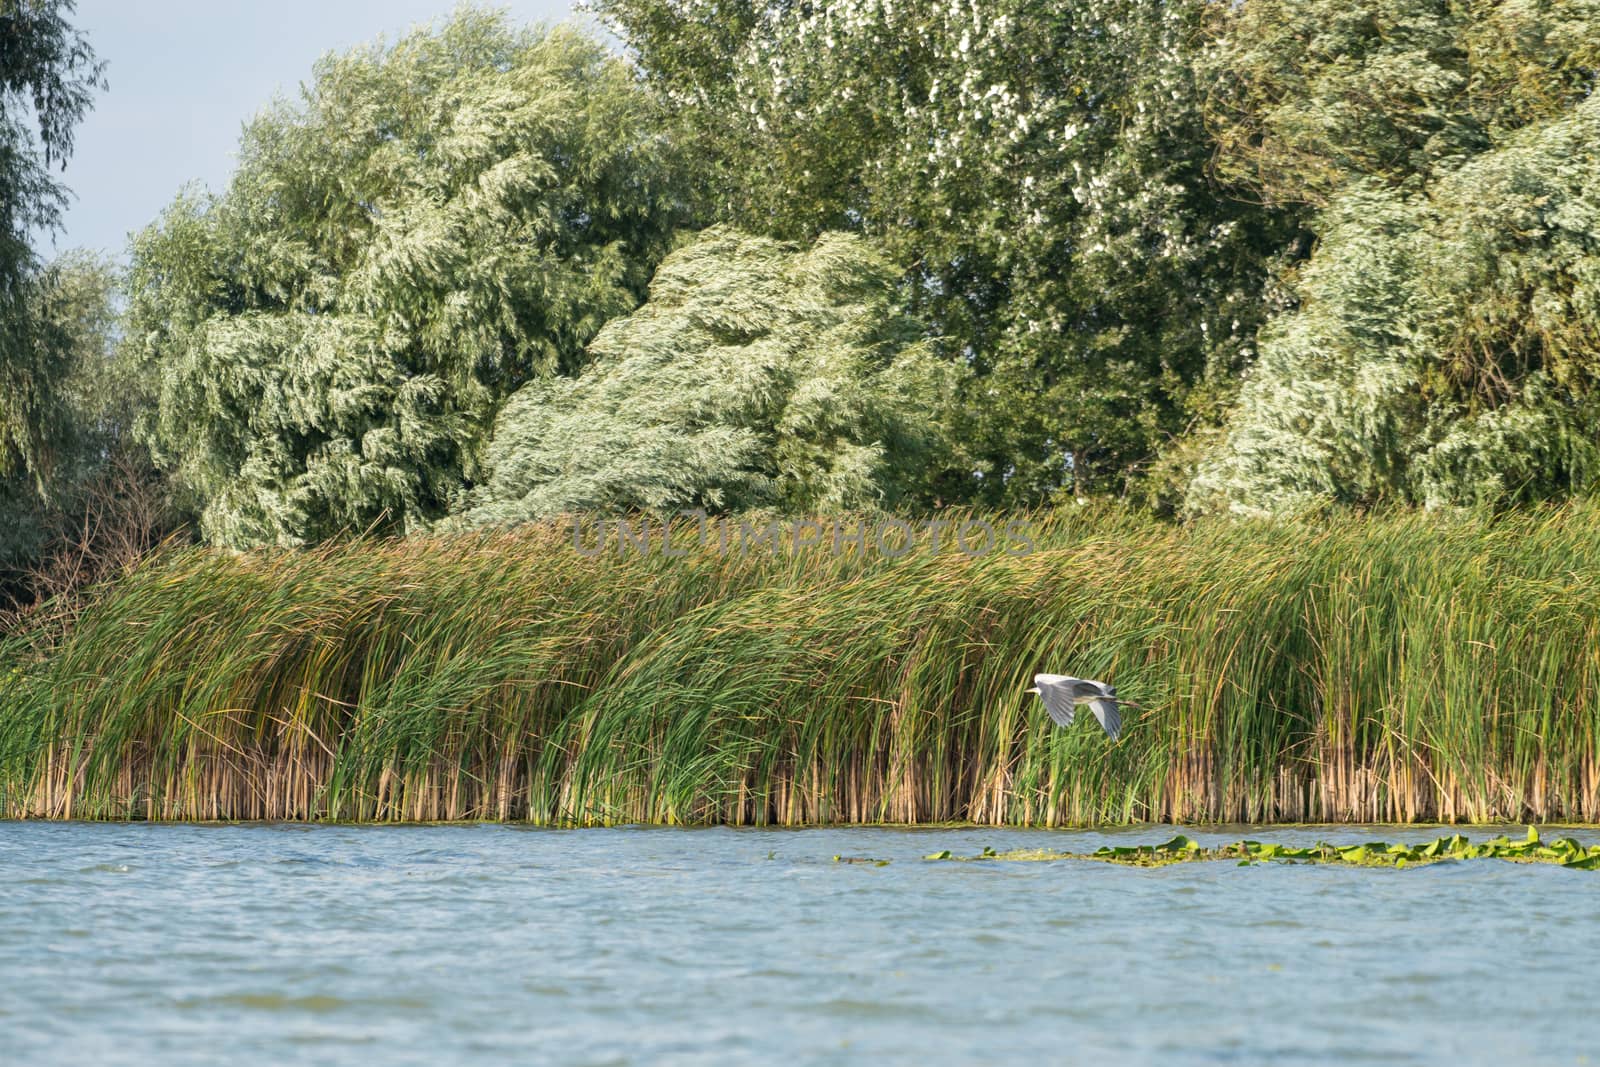 Grey Heron flying along the Danube Delta